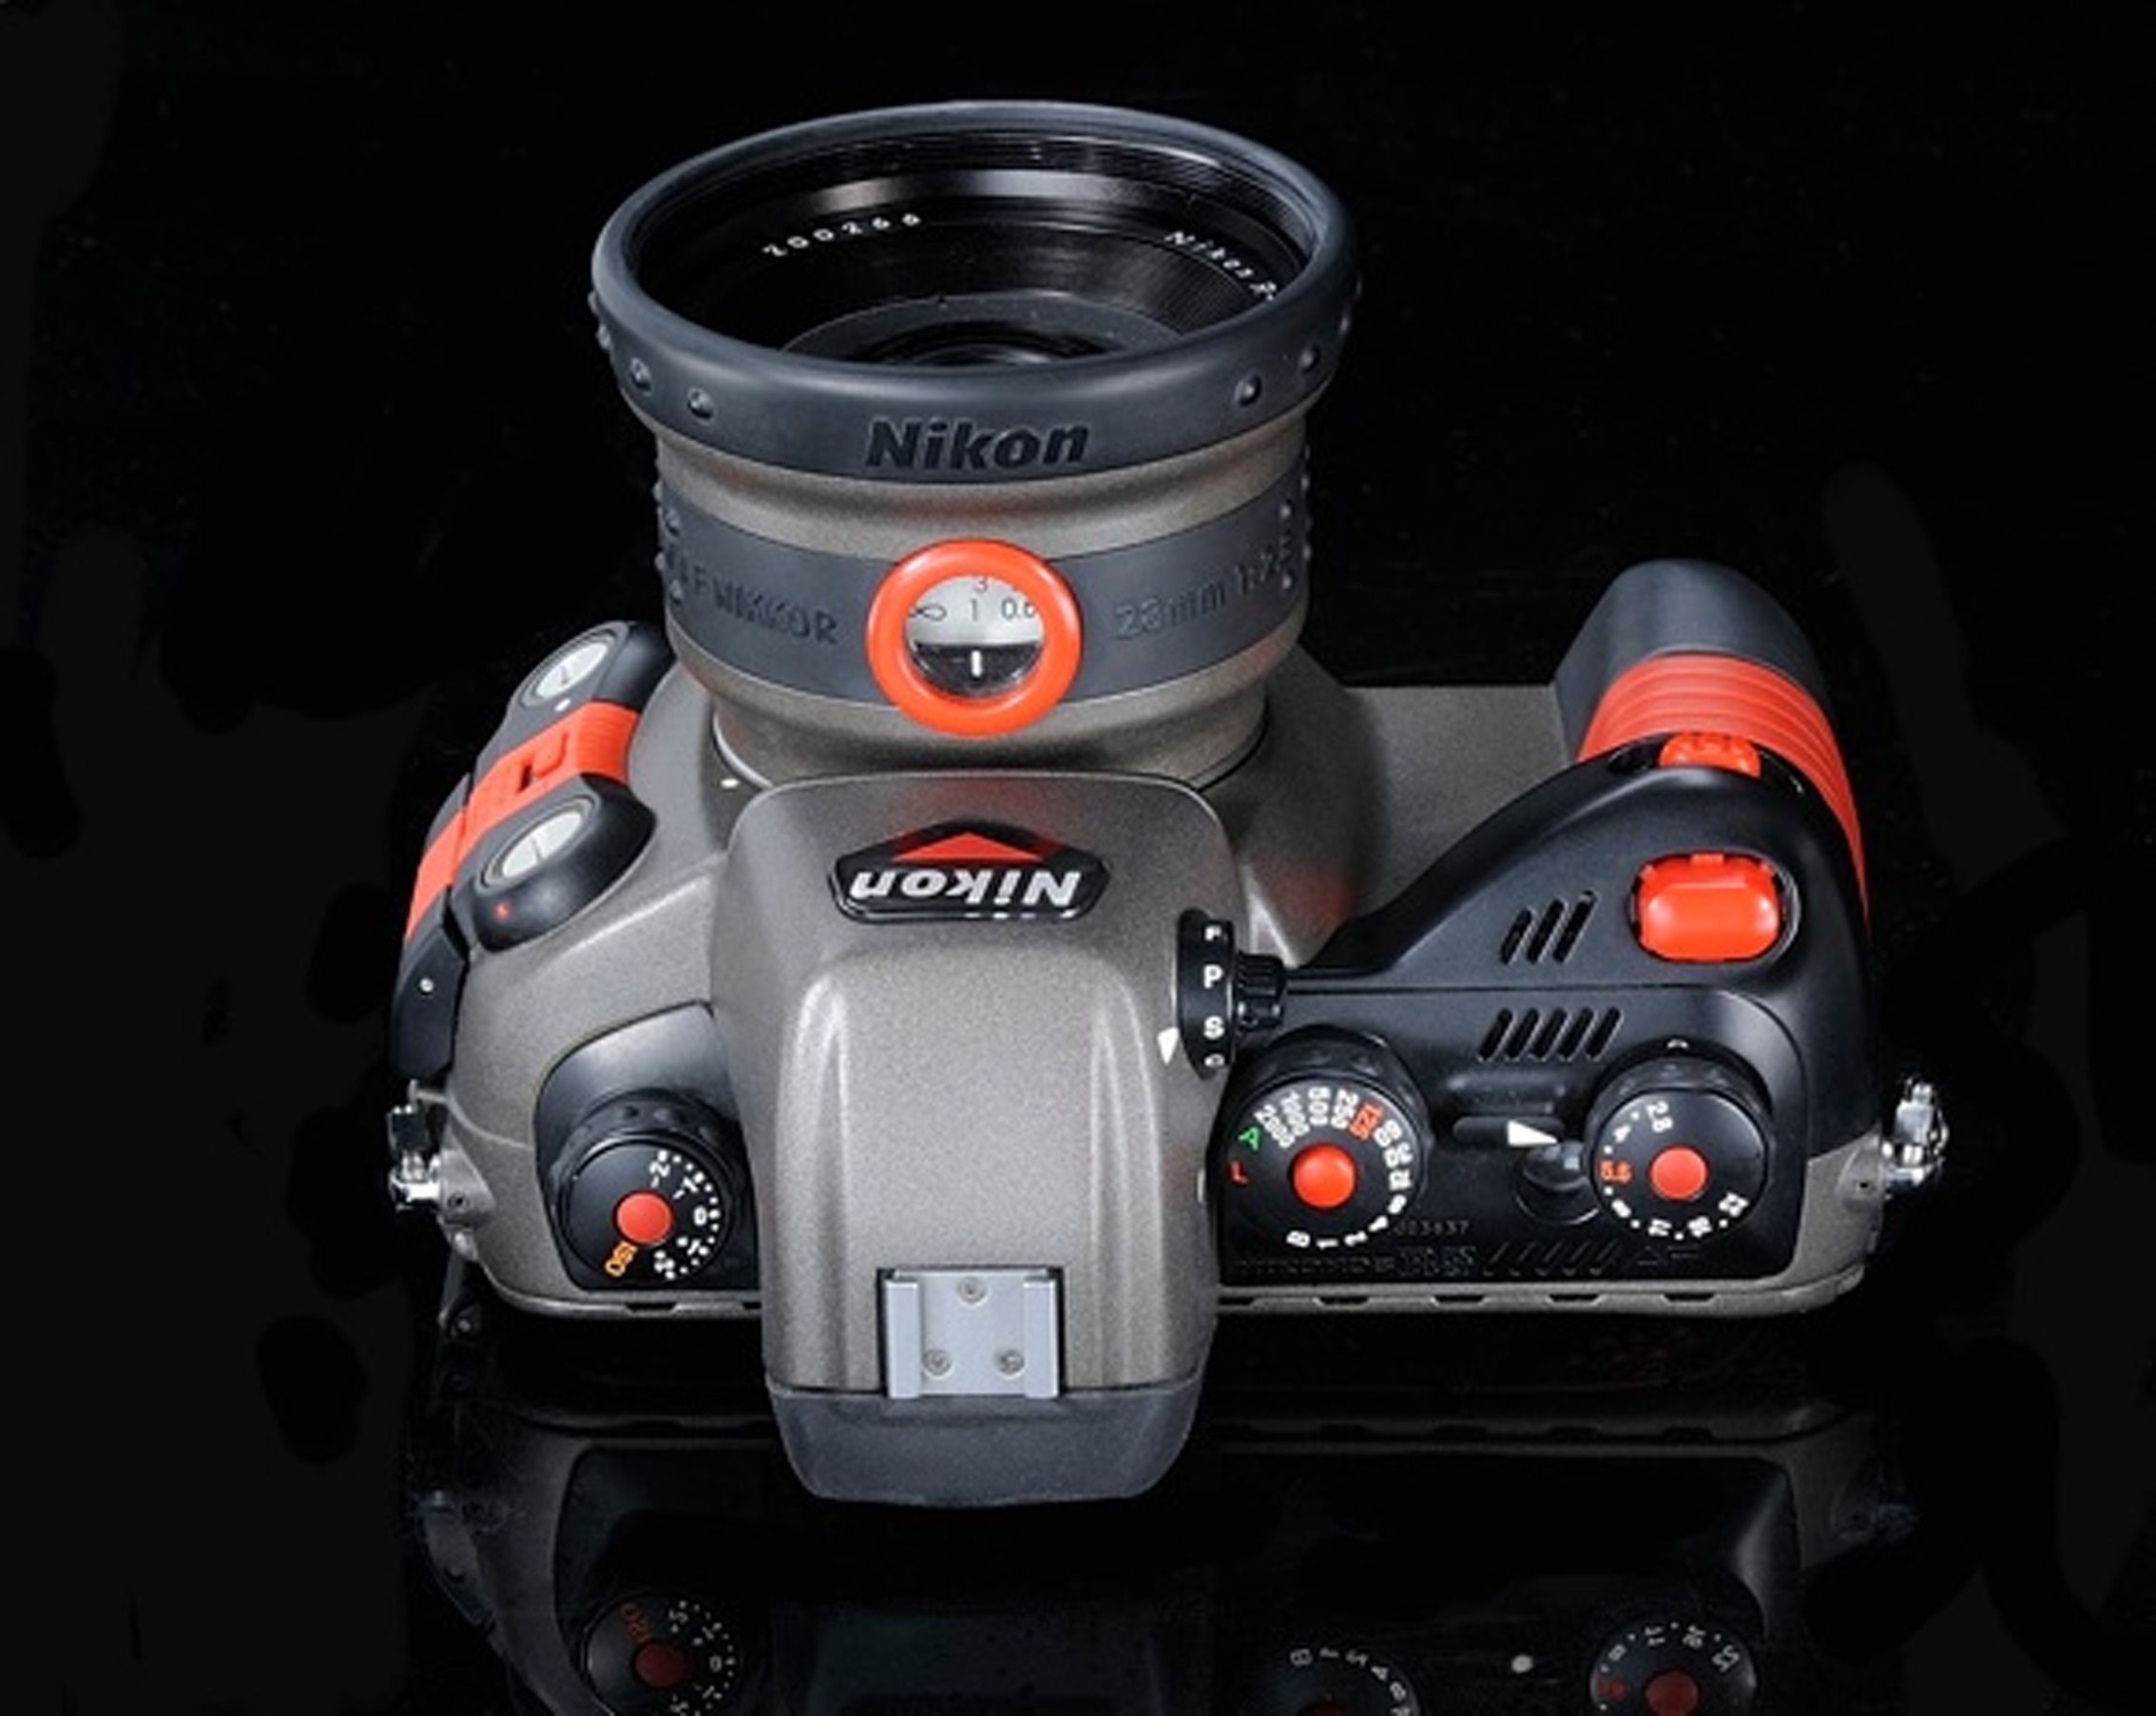 Nikonos RS underwater camera film -up- | cameras | Pinterest ...